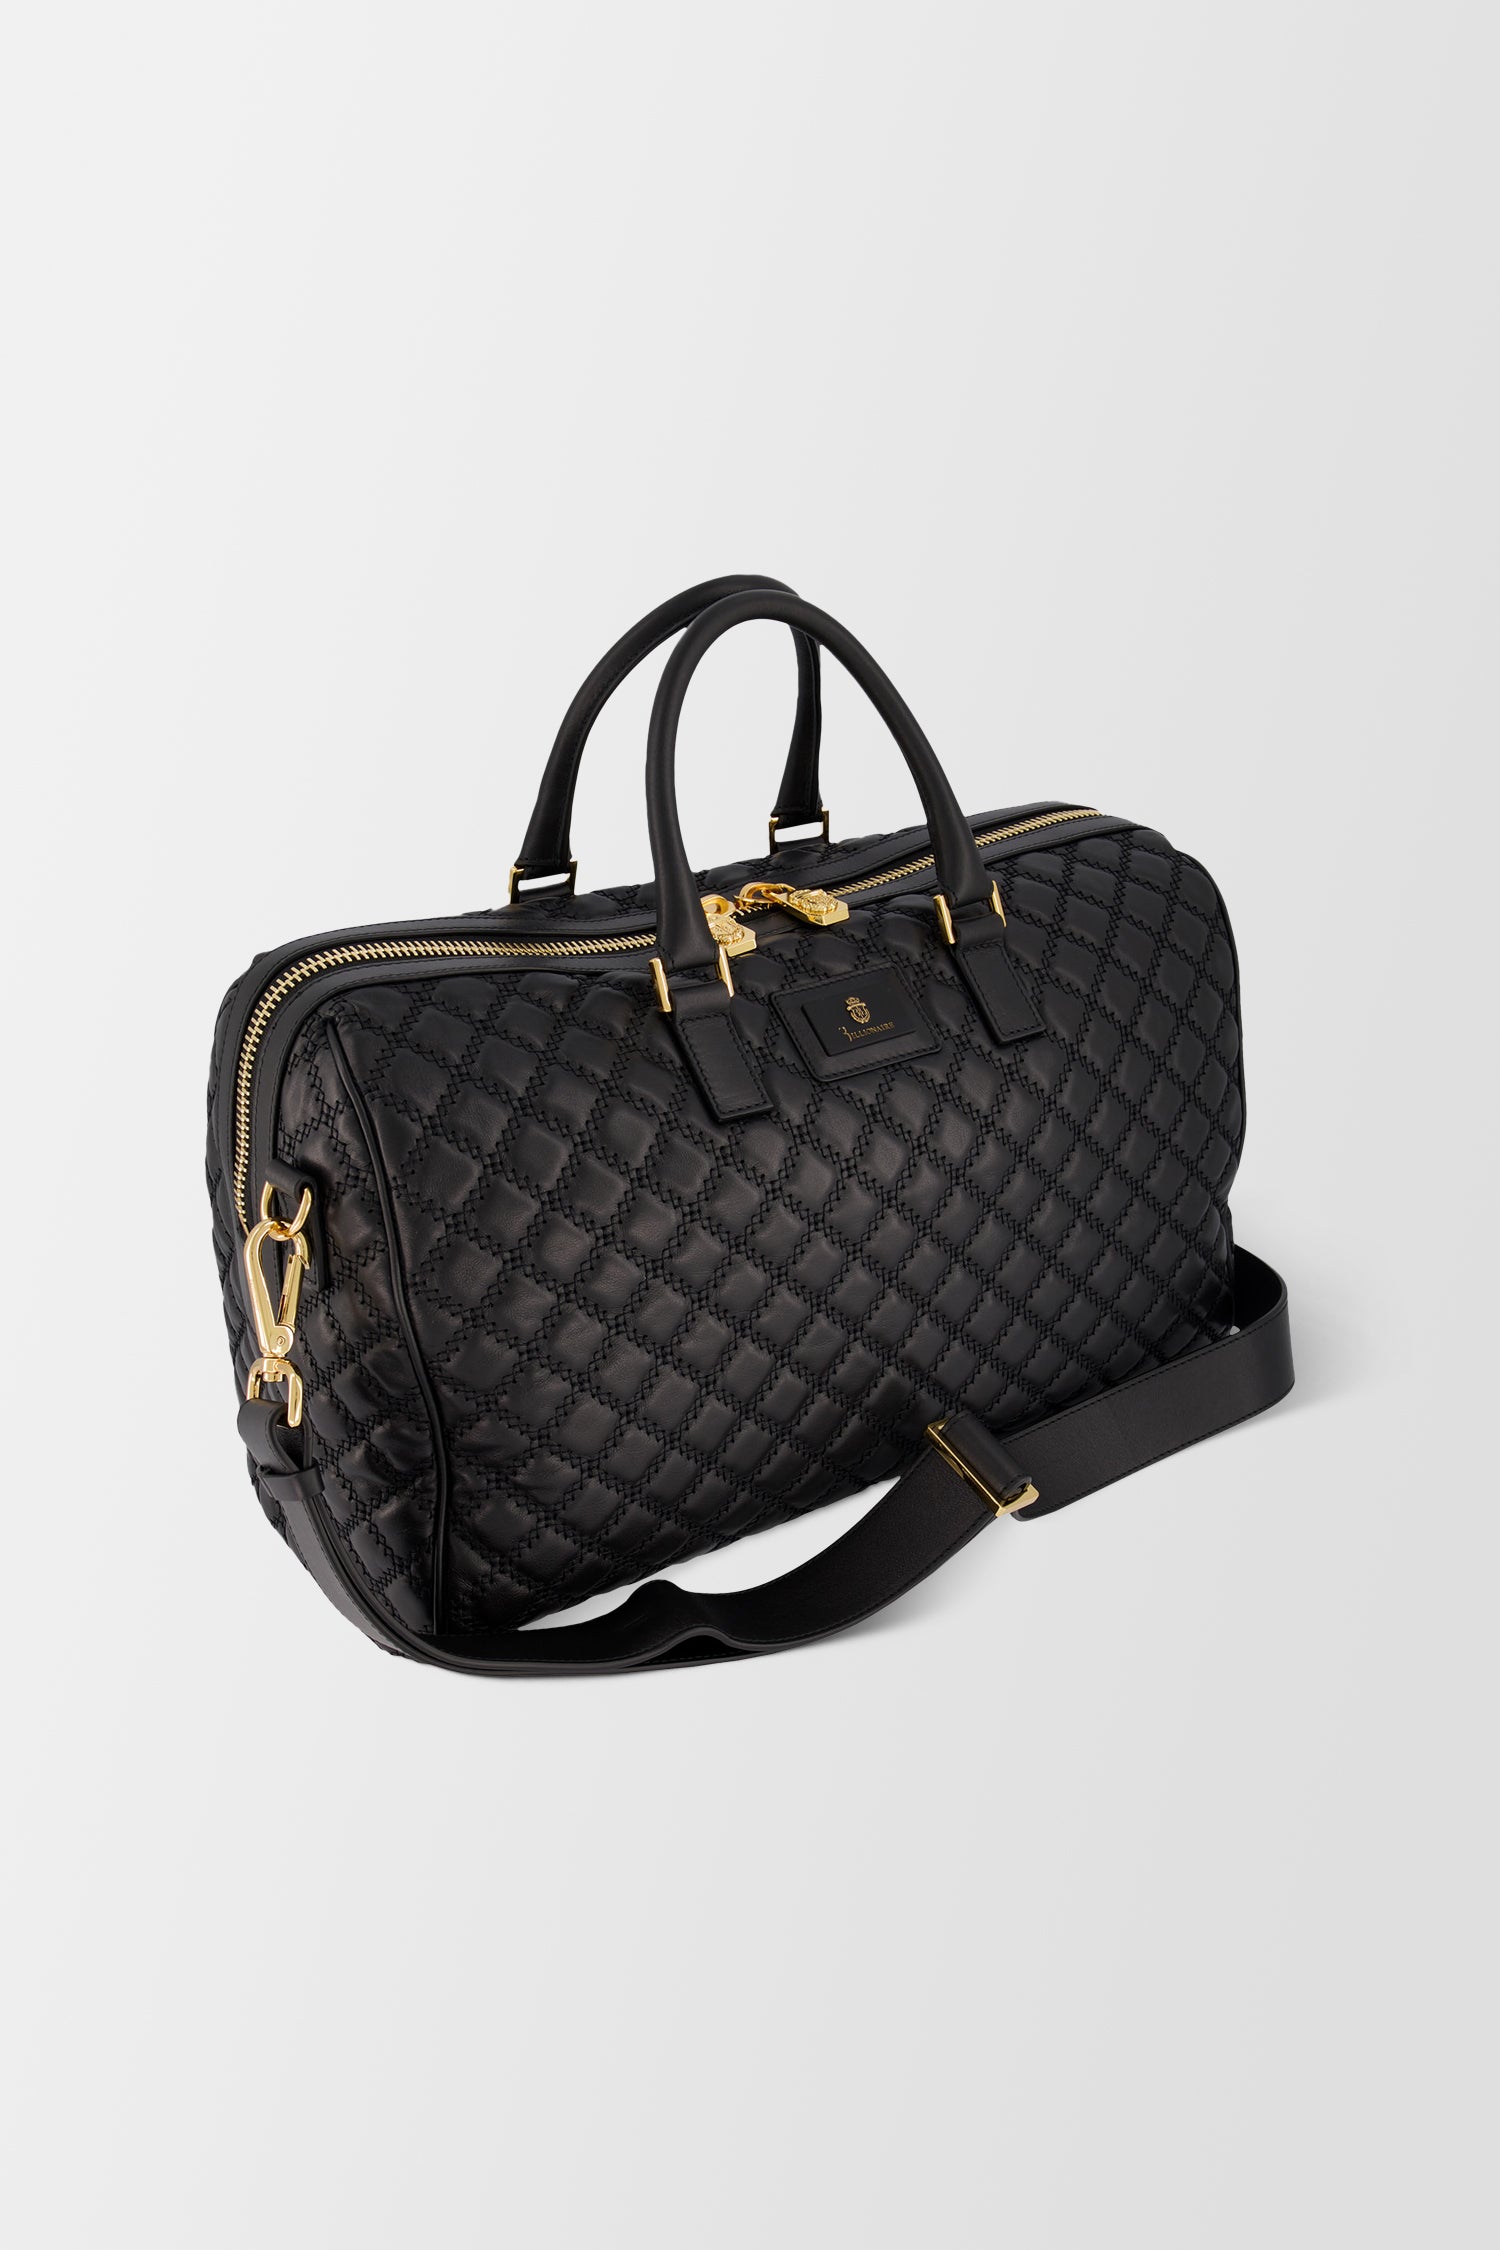 Billionaire Black/Gold Medium Travel Bag